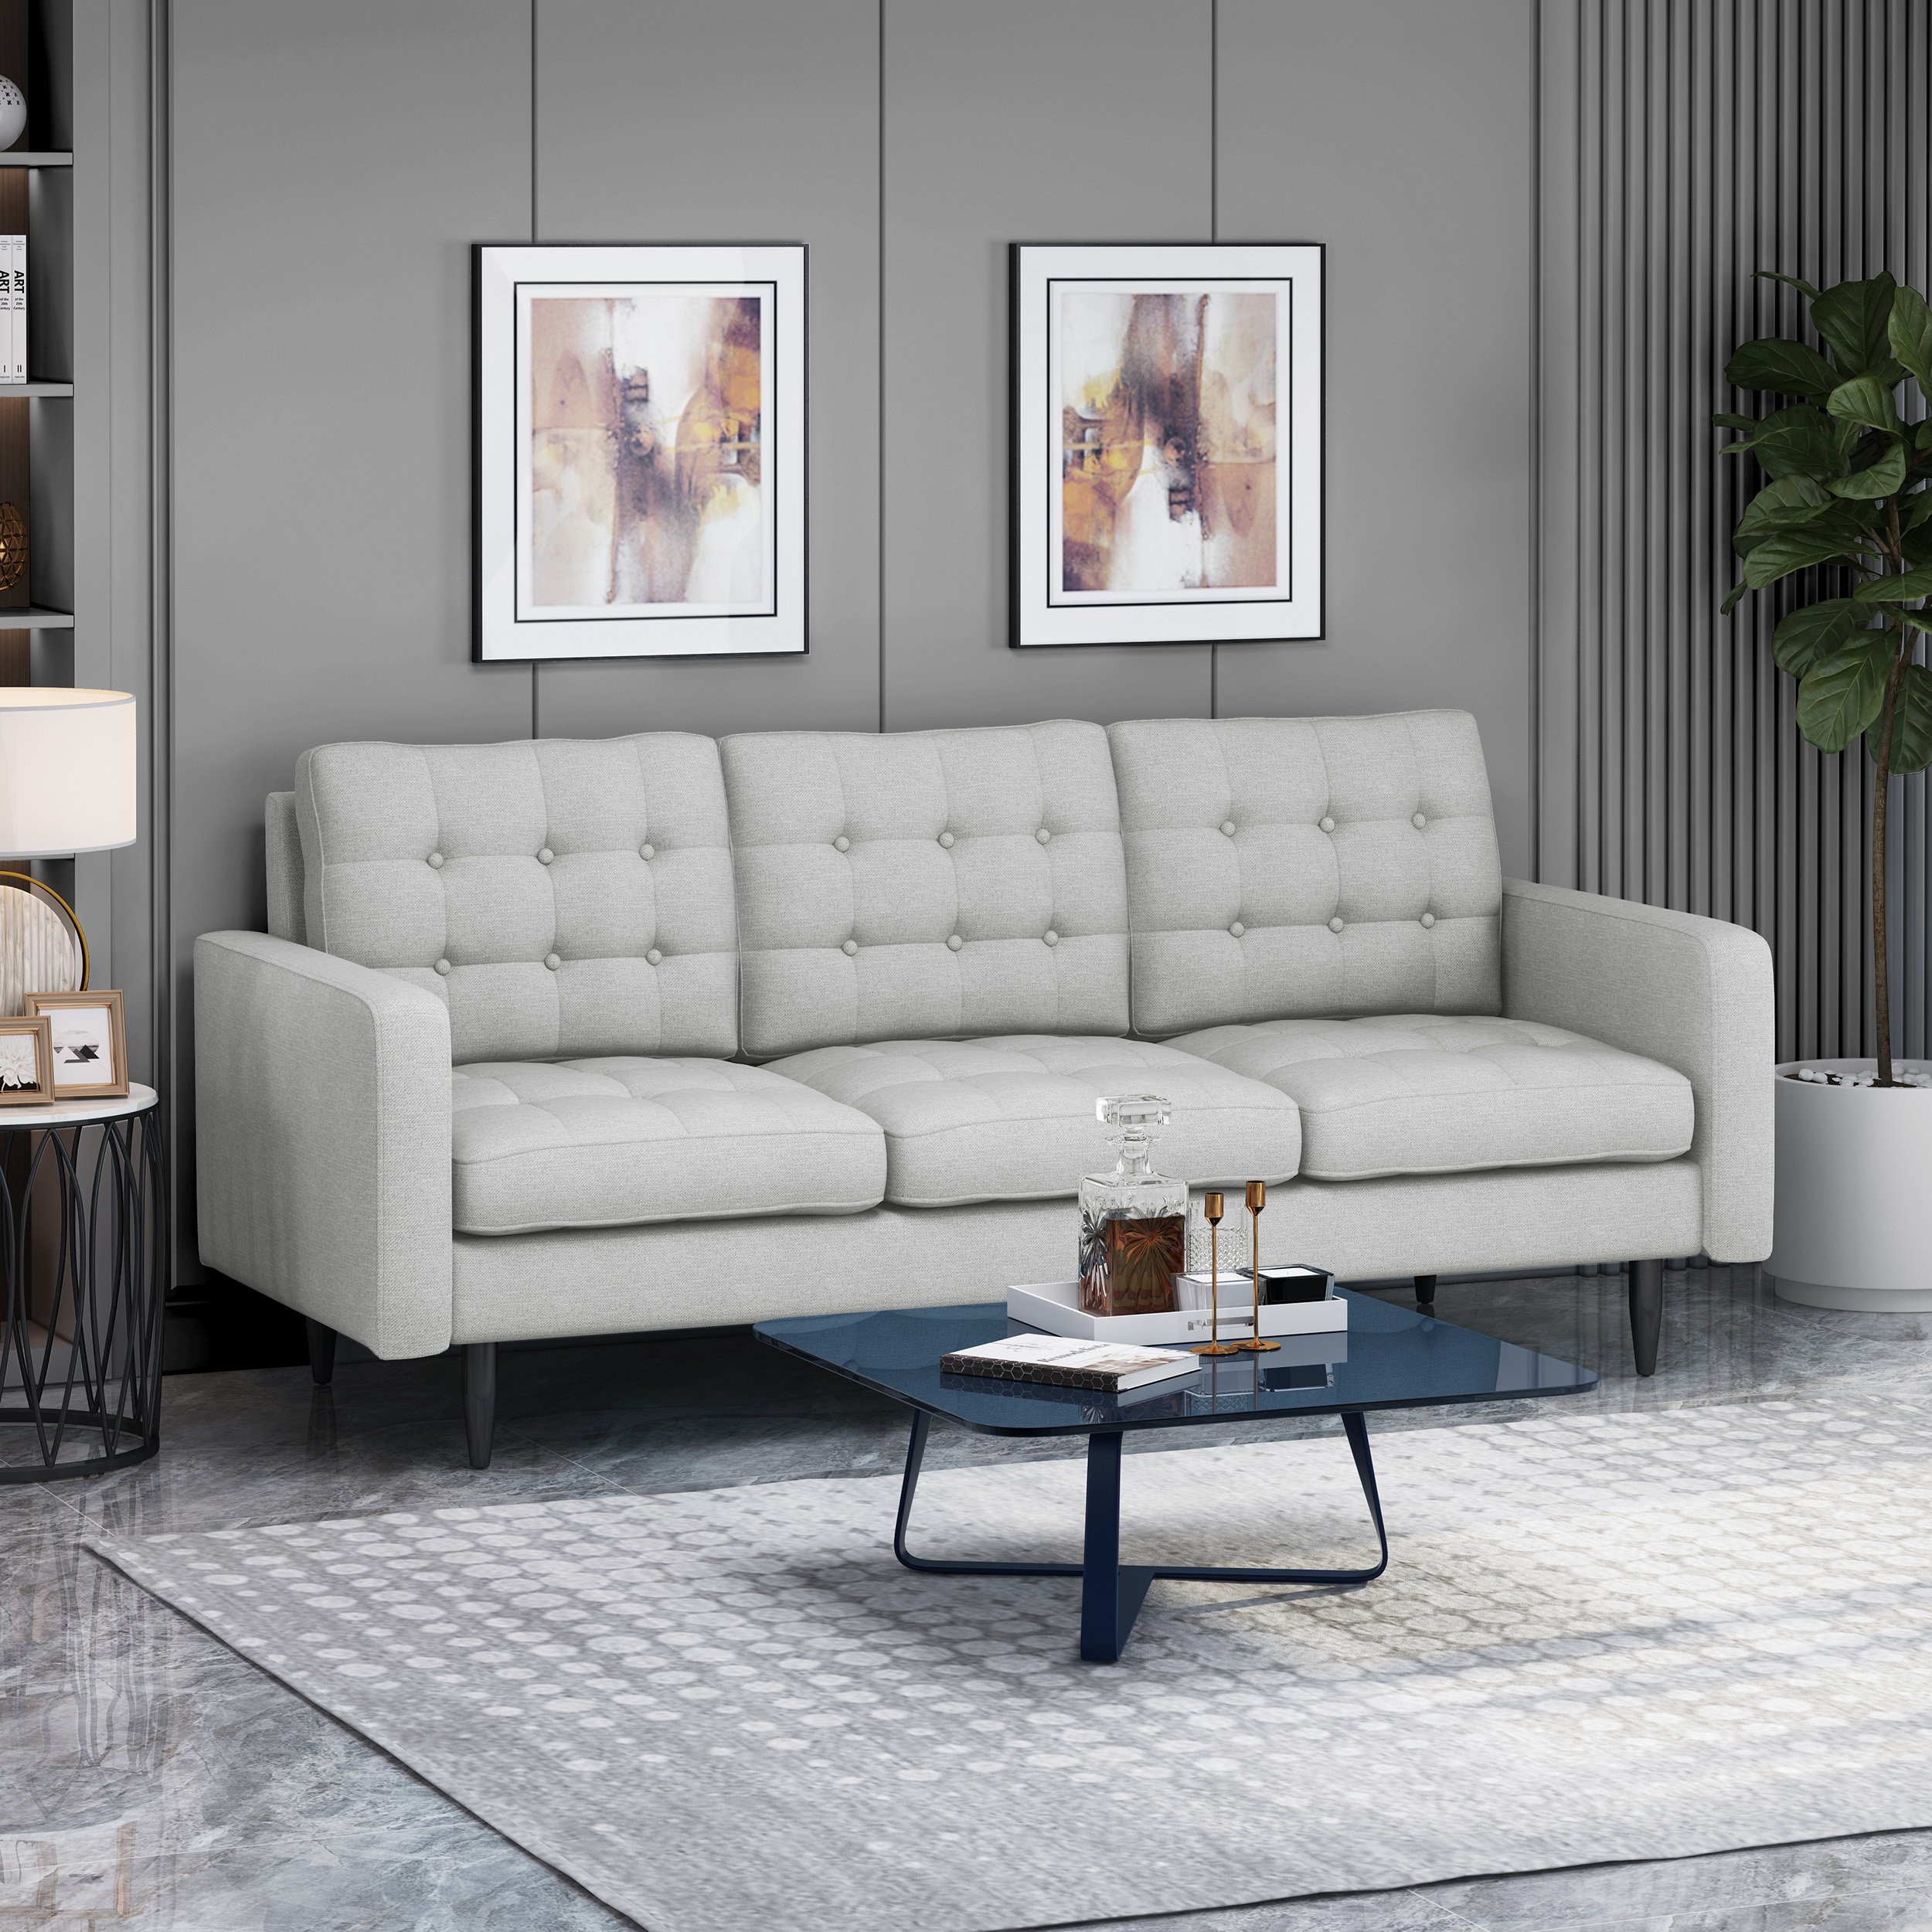 Jenny Contemporary Tufted Fabric 3 Seater Sofa - Light Gray + Dark Brown